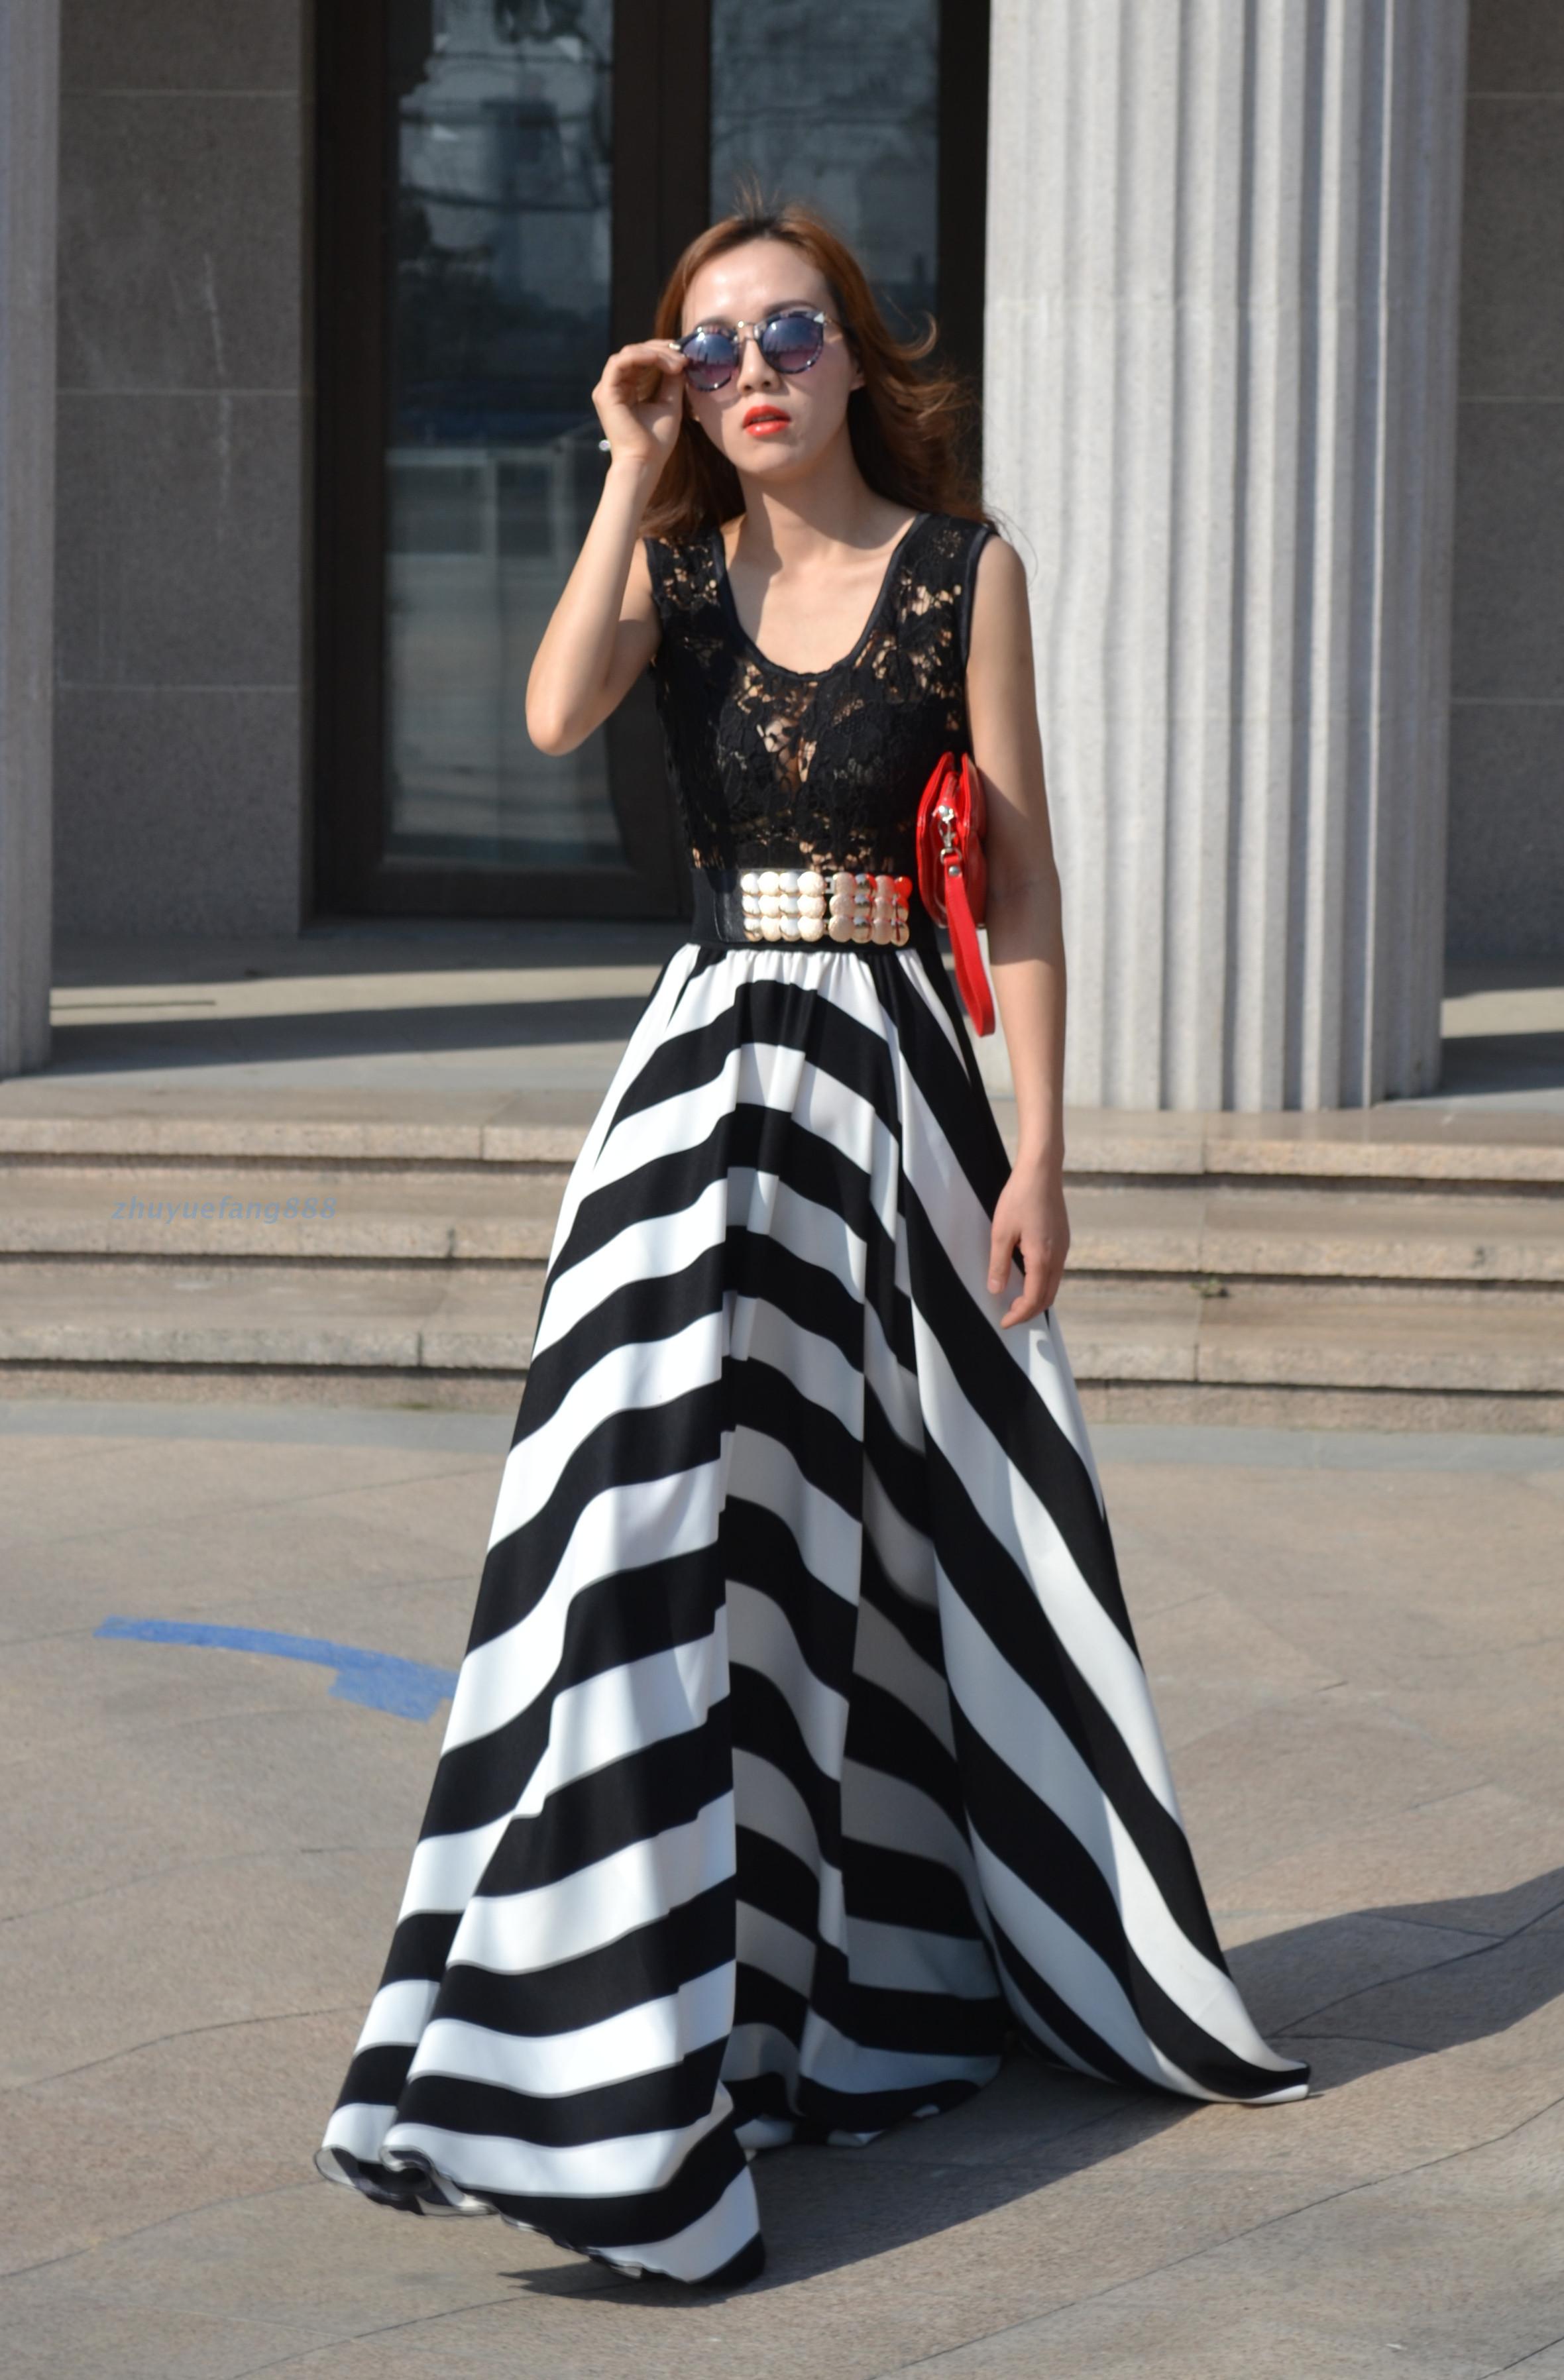 Big-wing-fashion-chiffon-long-print-striped-dresses-women-summer-dress-2014-new-casual-maxi-dress